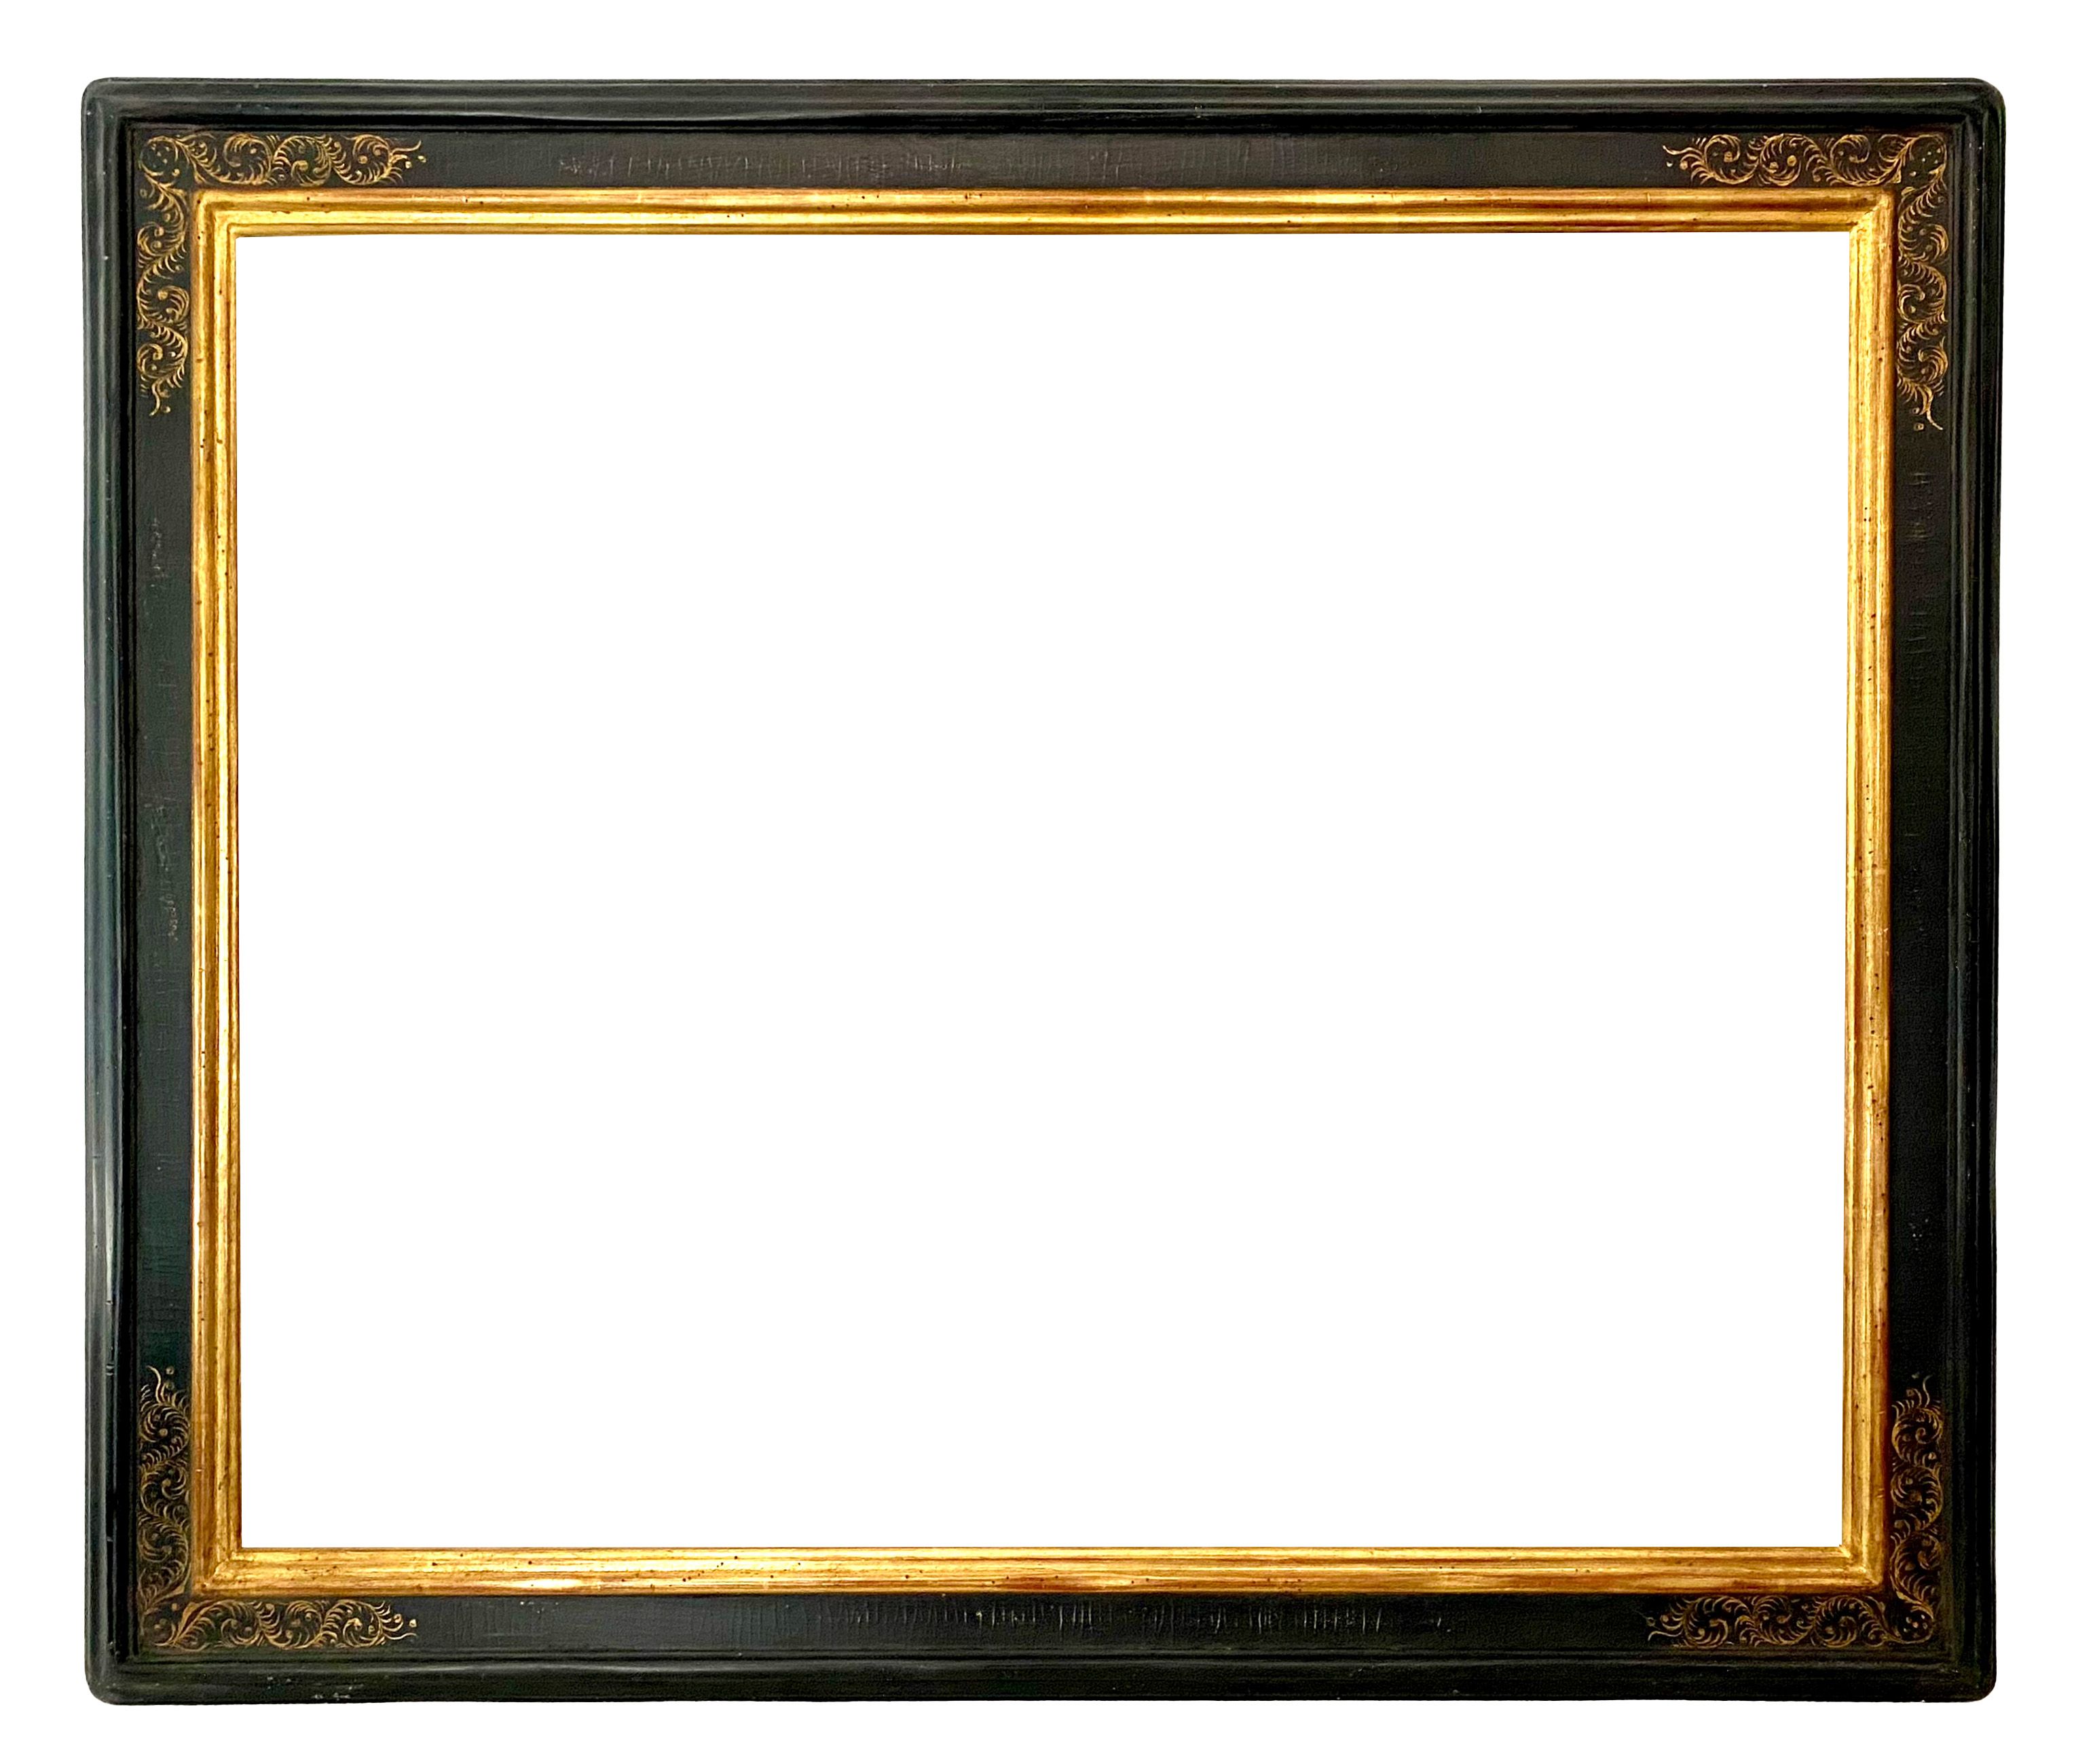 Renaissance style frame - 73 x 58 cm - REF-1022